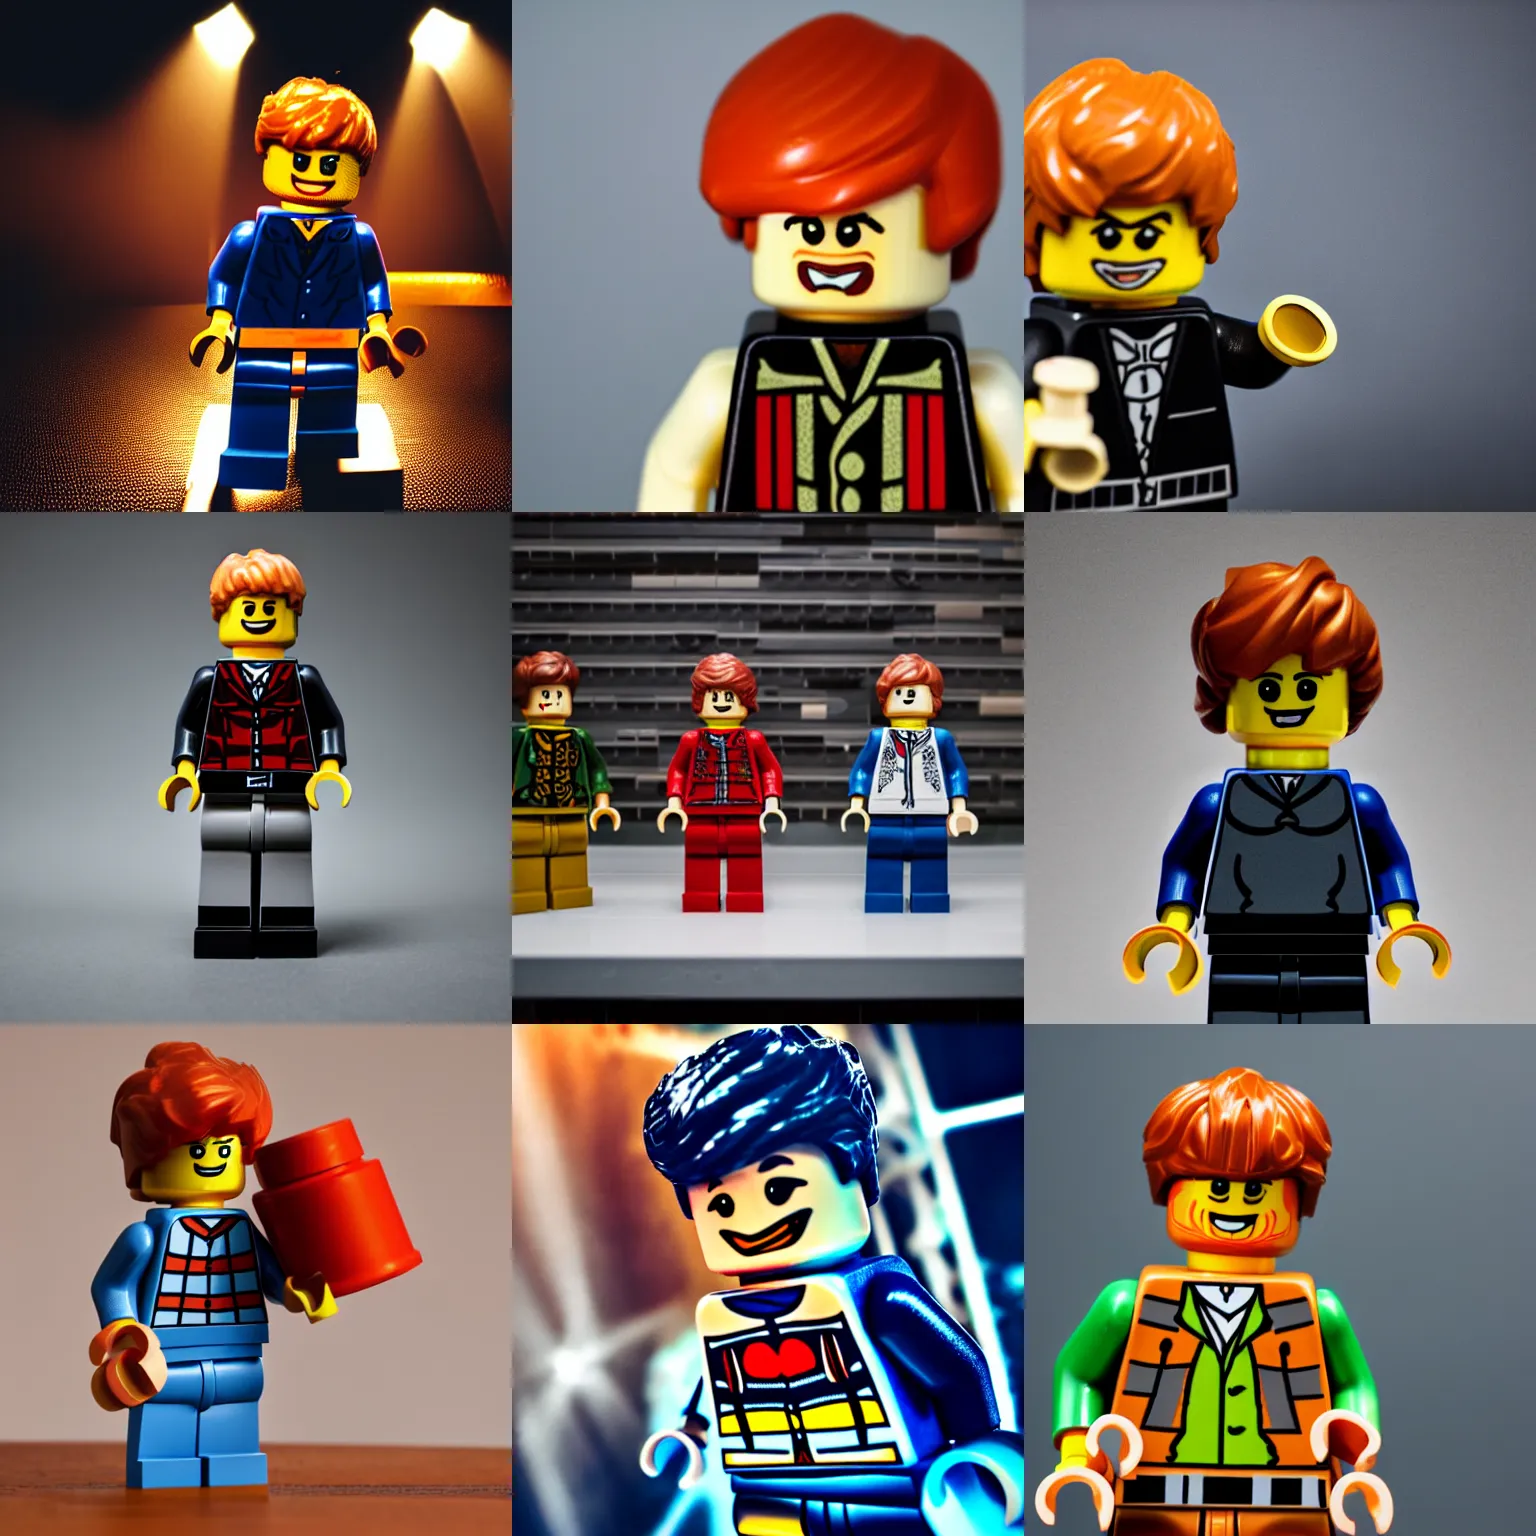 Prompt: lego figurine of ed sheeran, studio lighting, macro lens, high quality